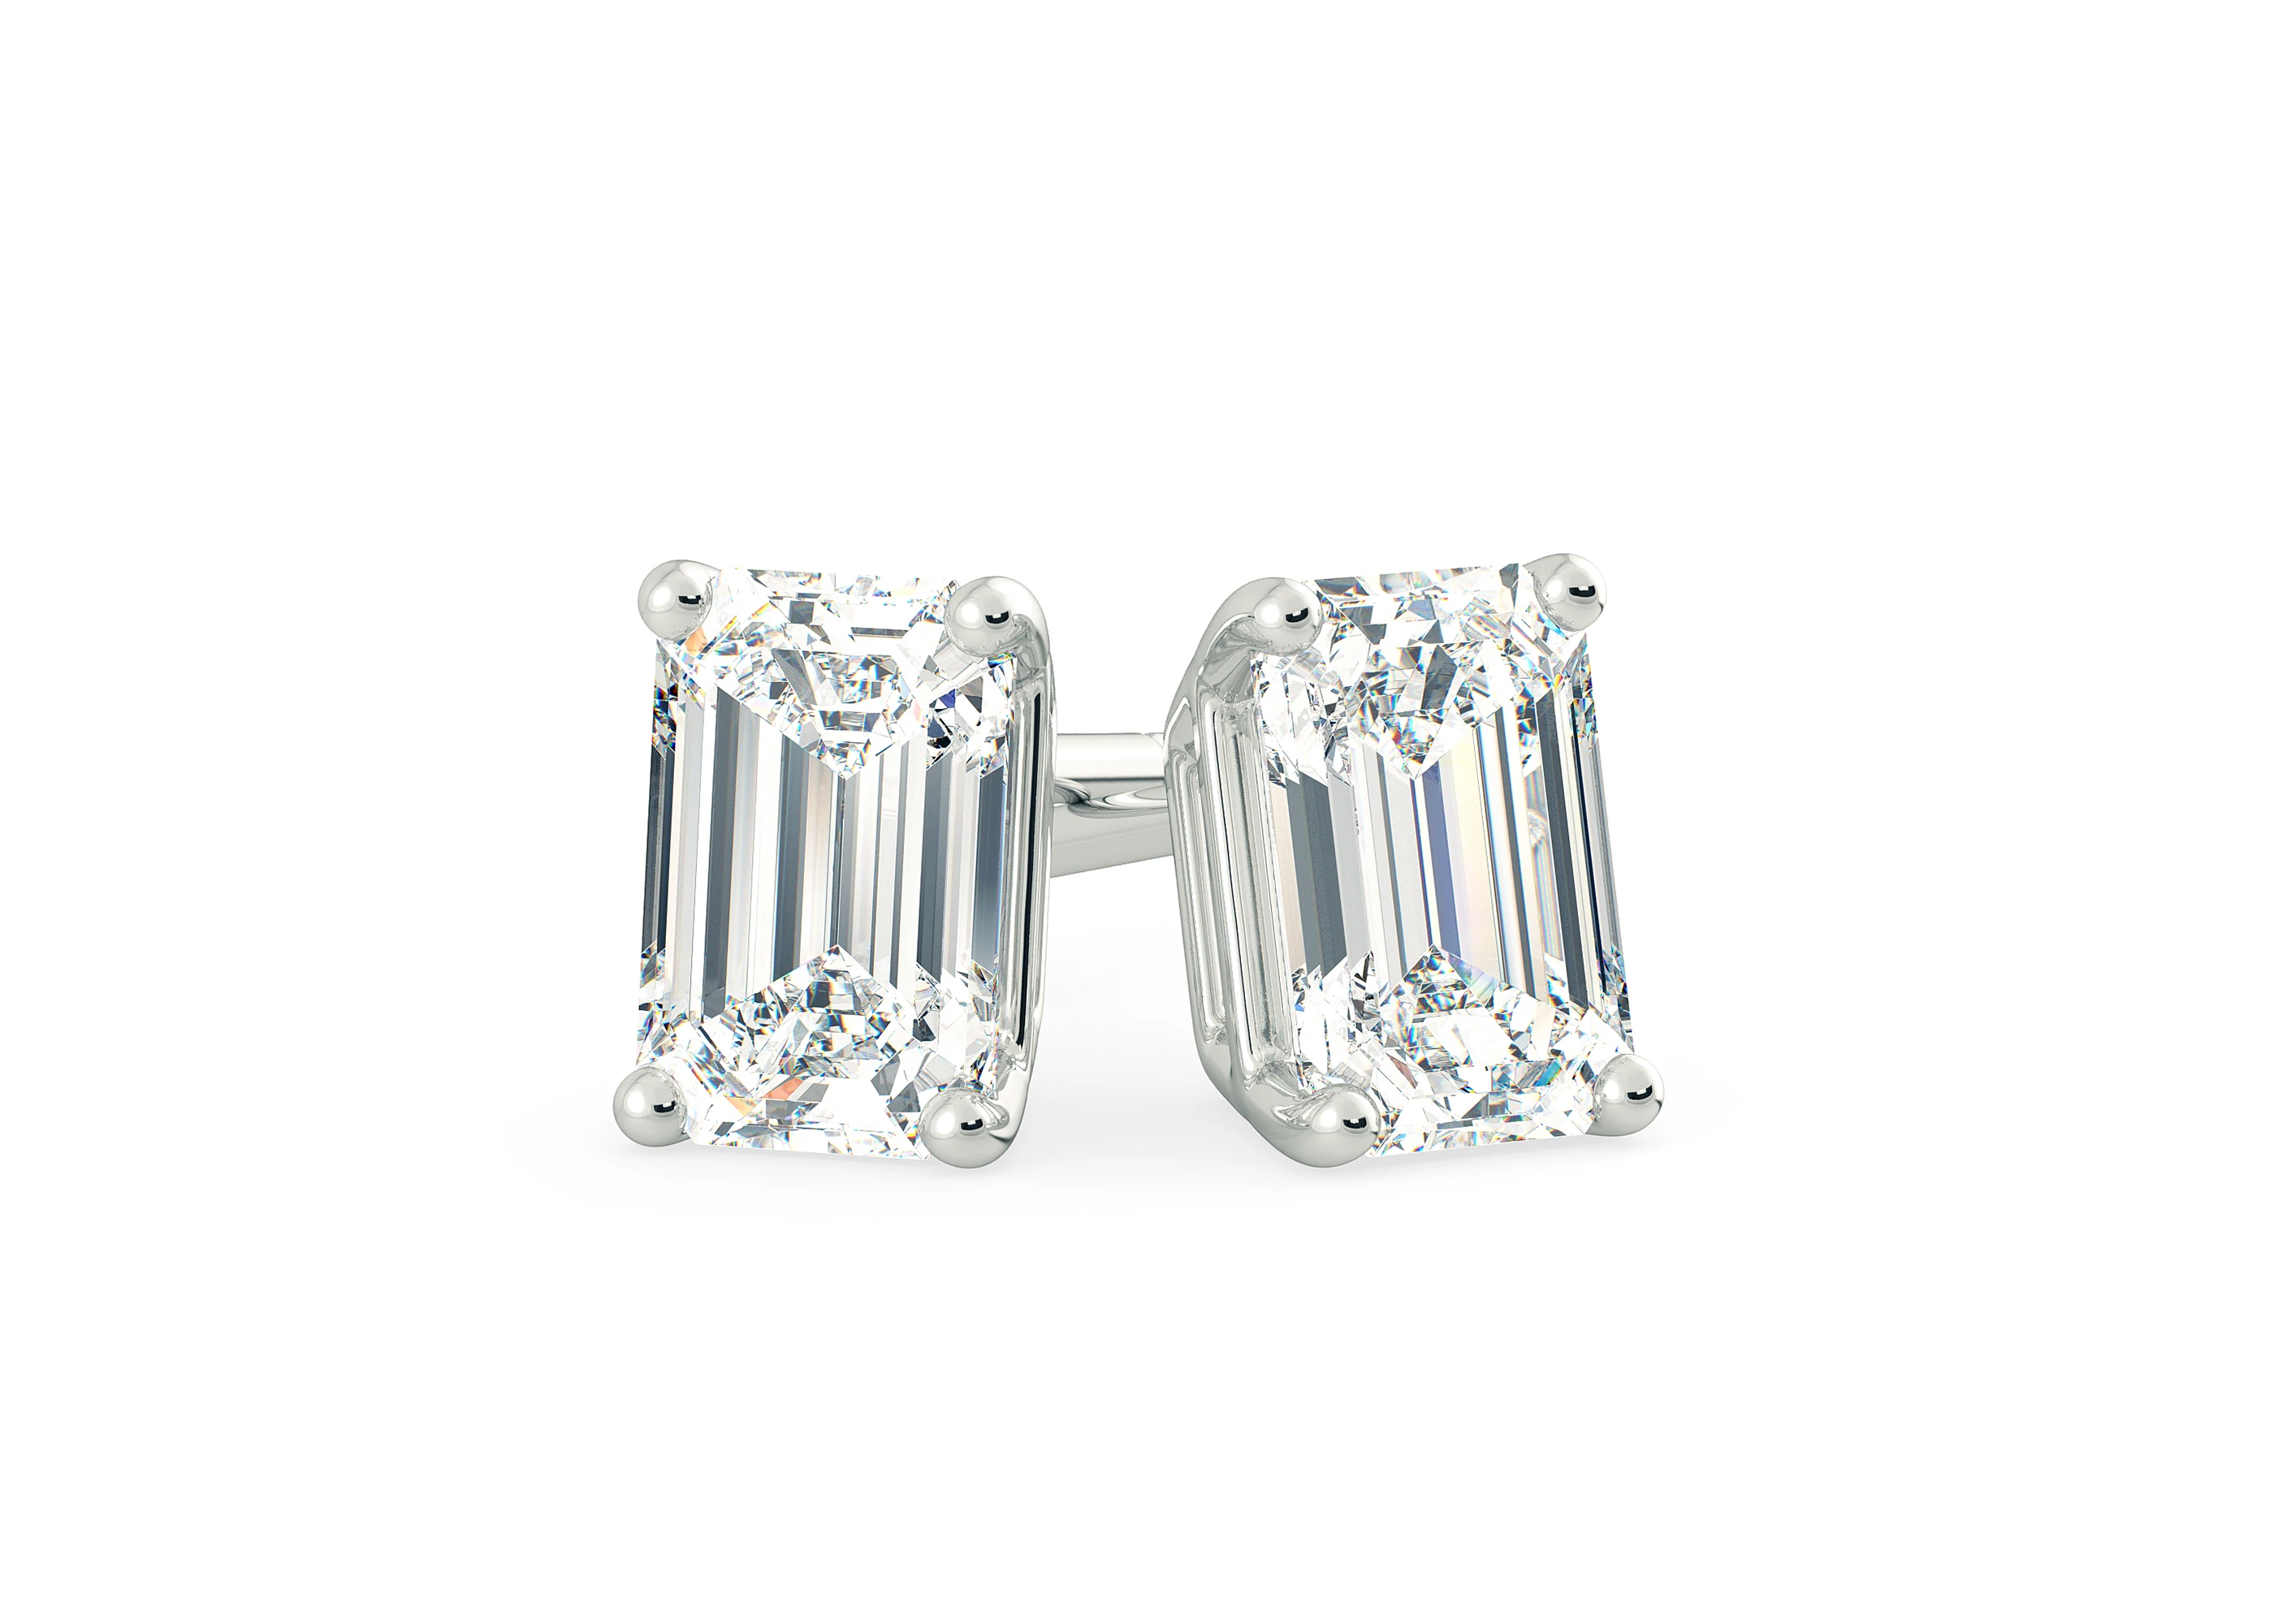 Ettore Emerald Diamond Stud Earrings in Platinum with Butterfly Backs